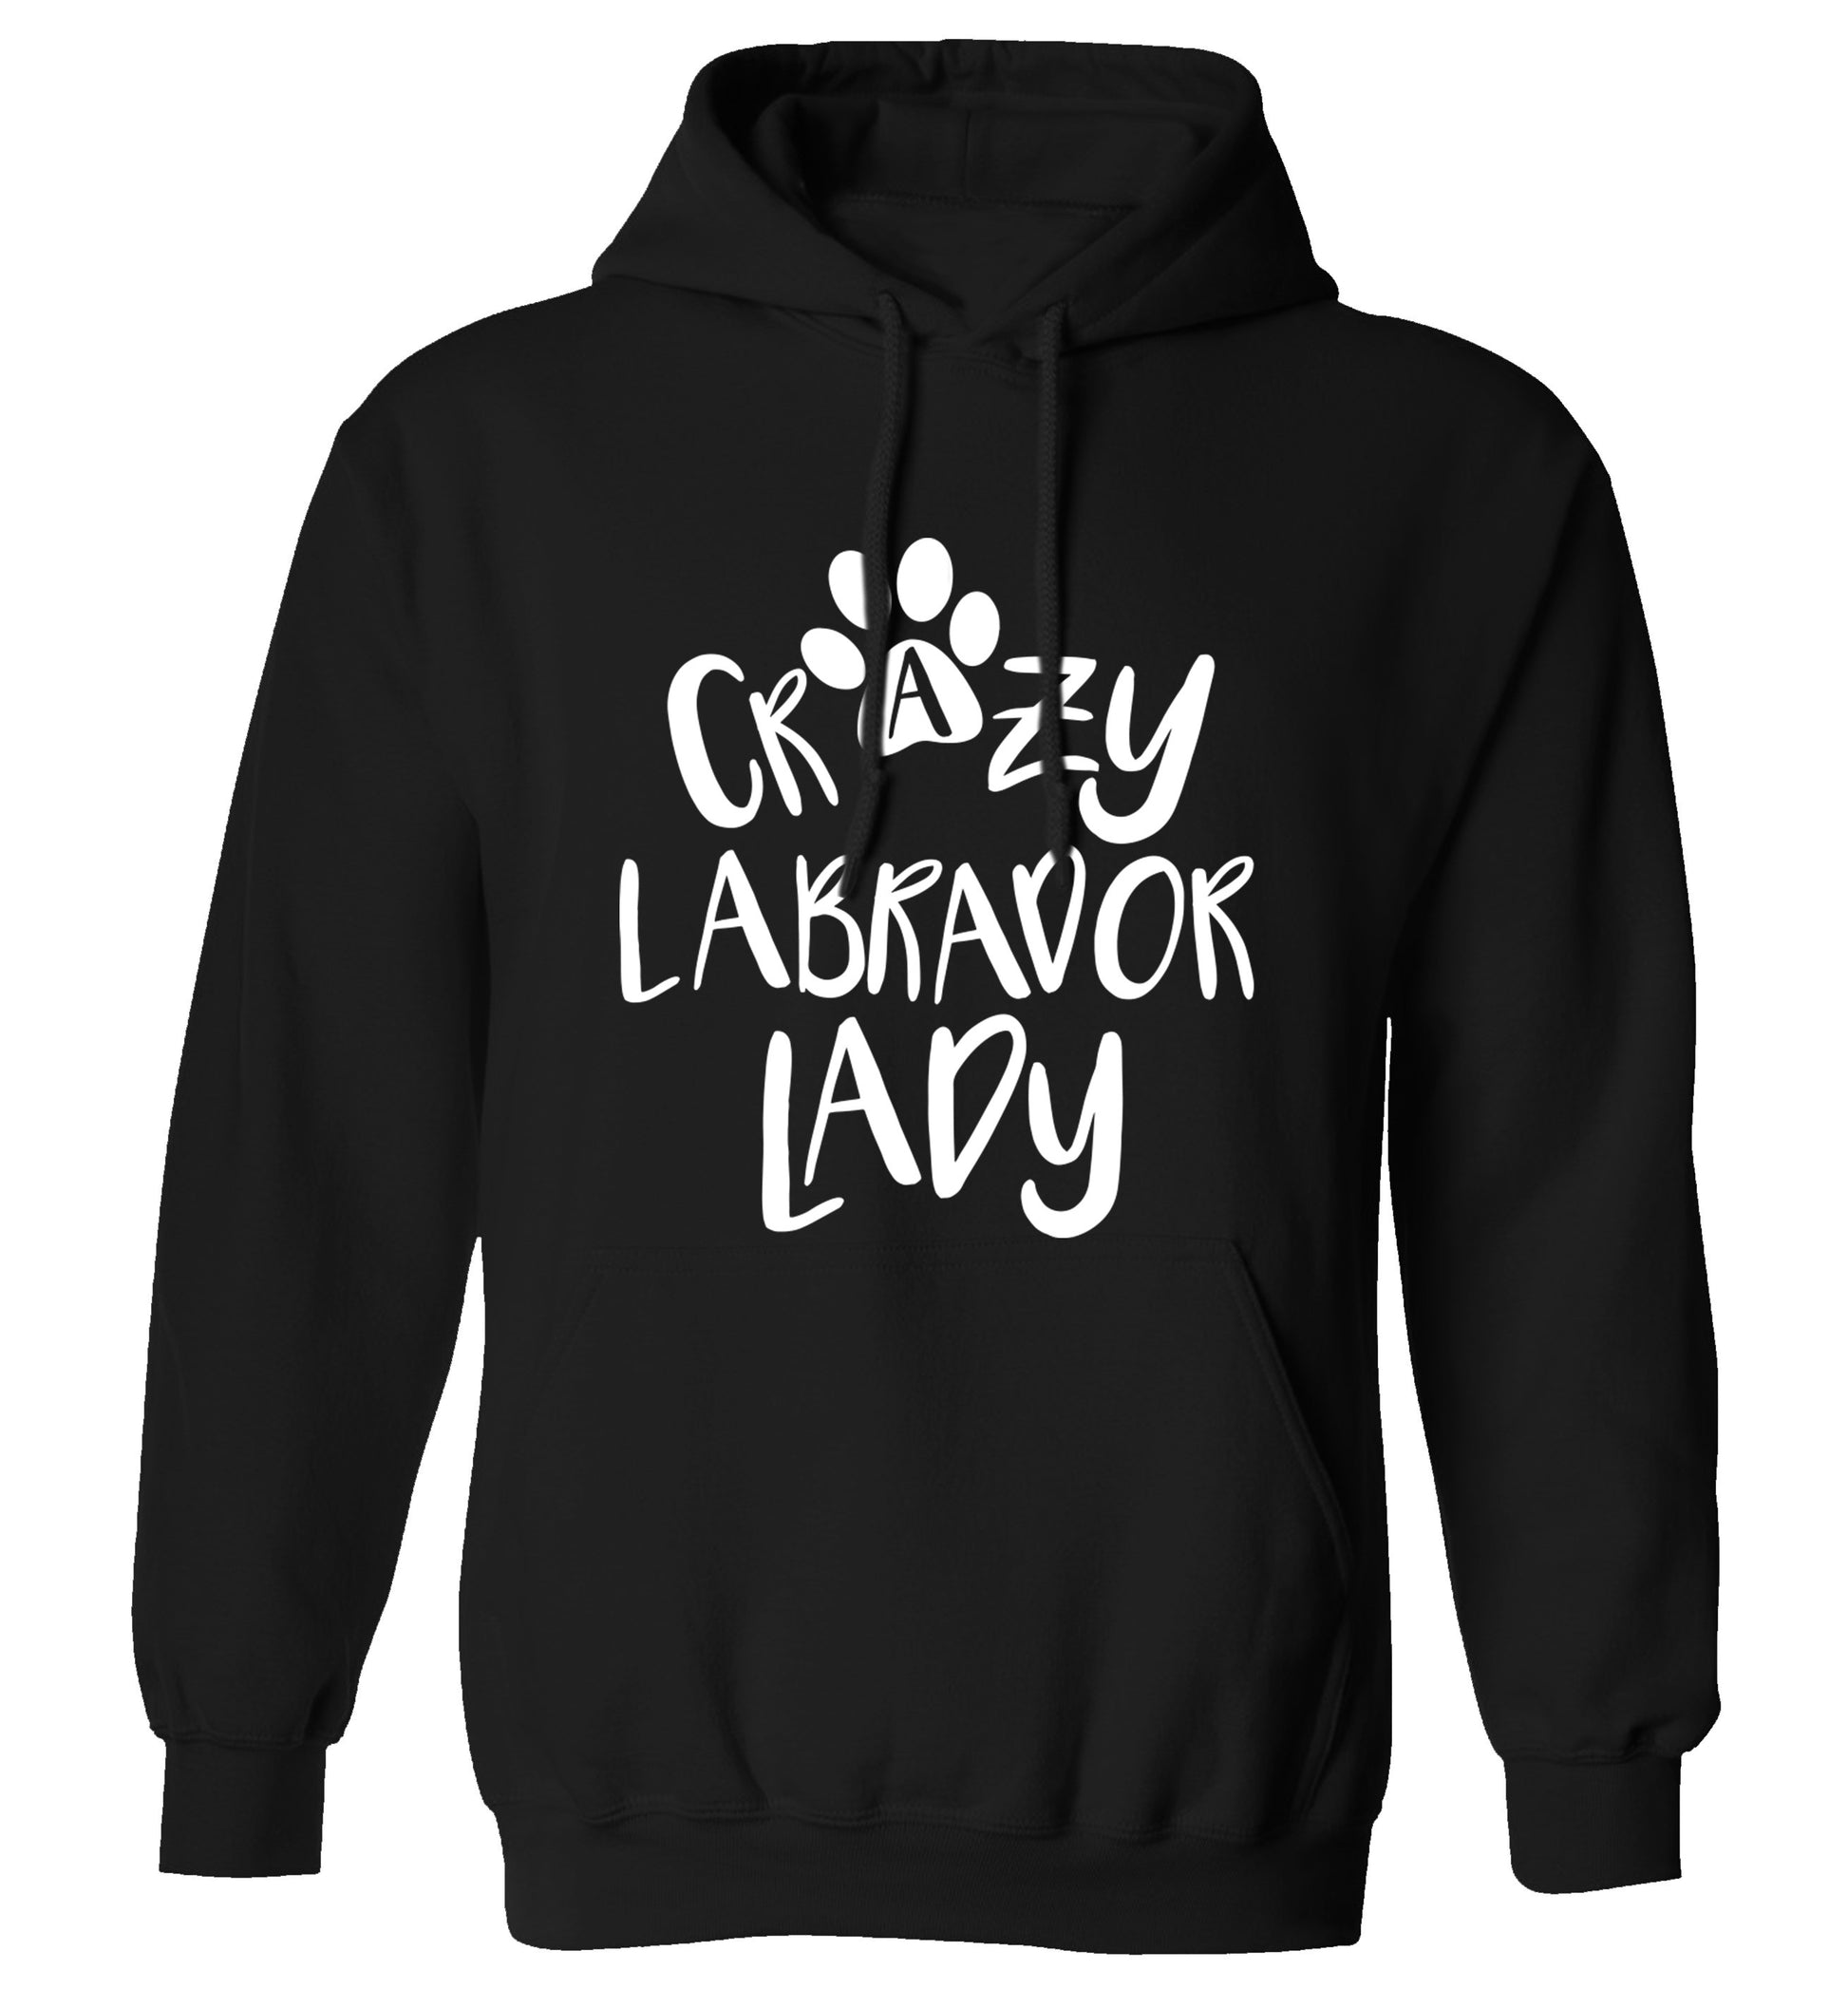 Crazy labrador lady adults unisex black hoodie 2XL